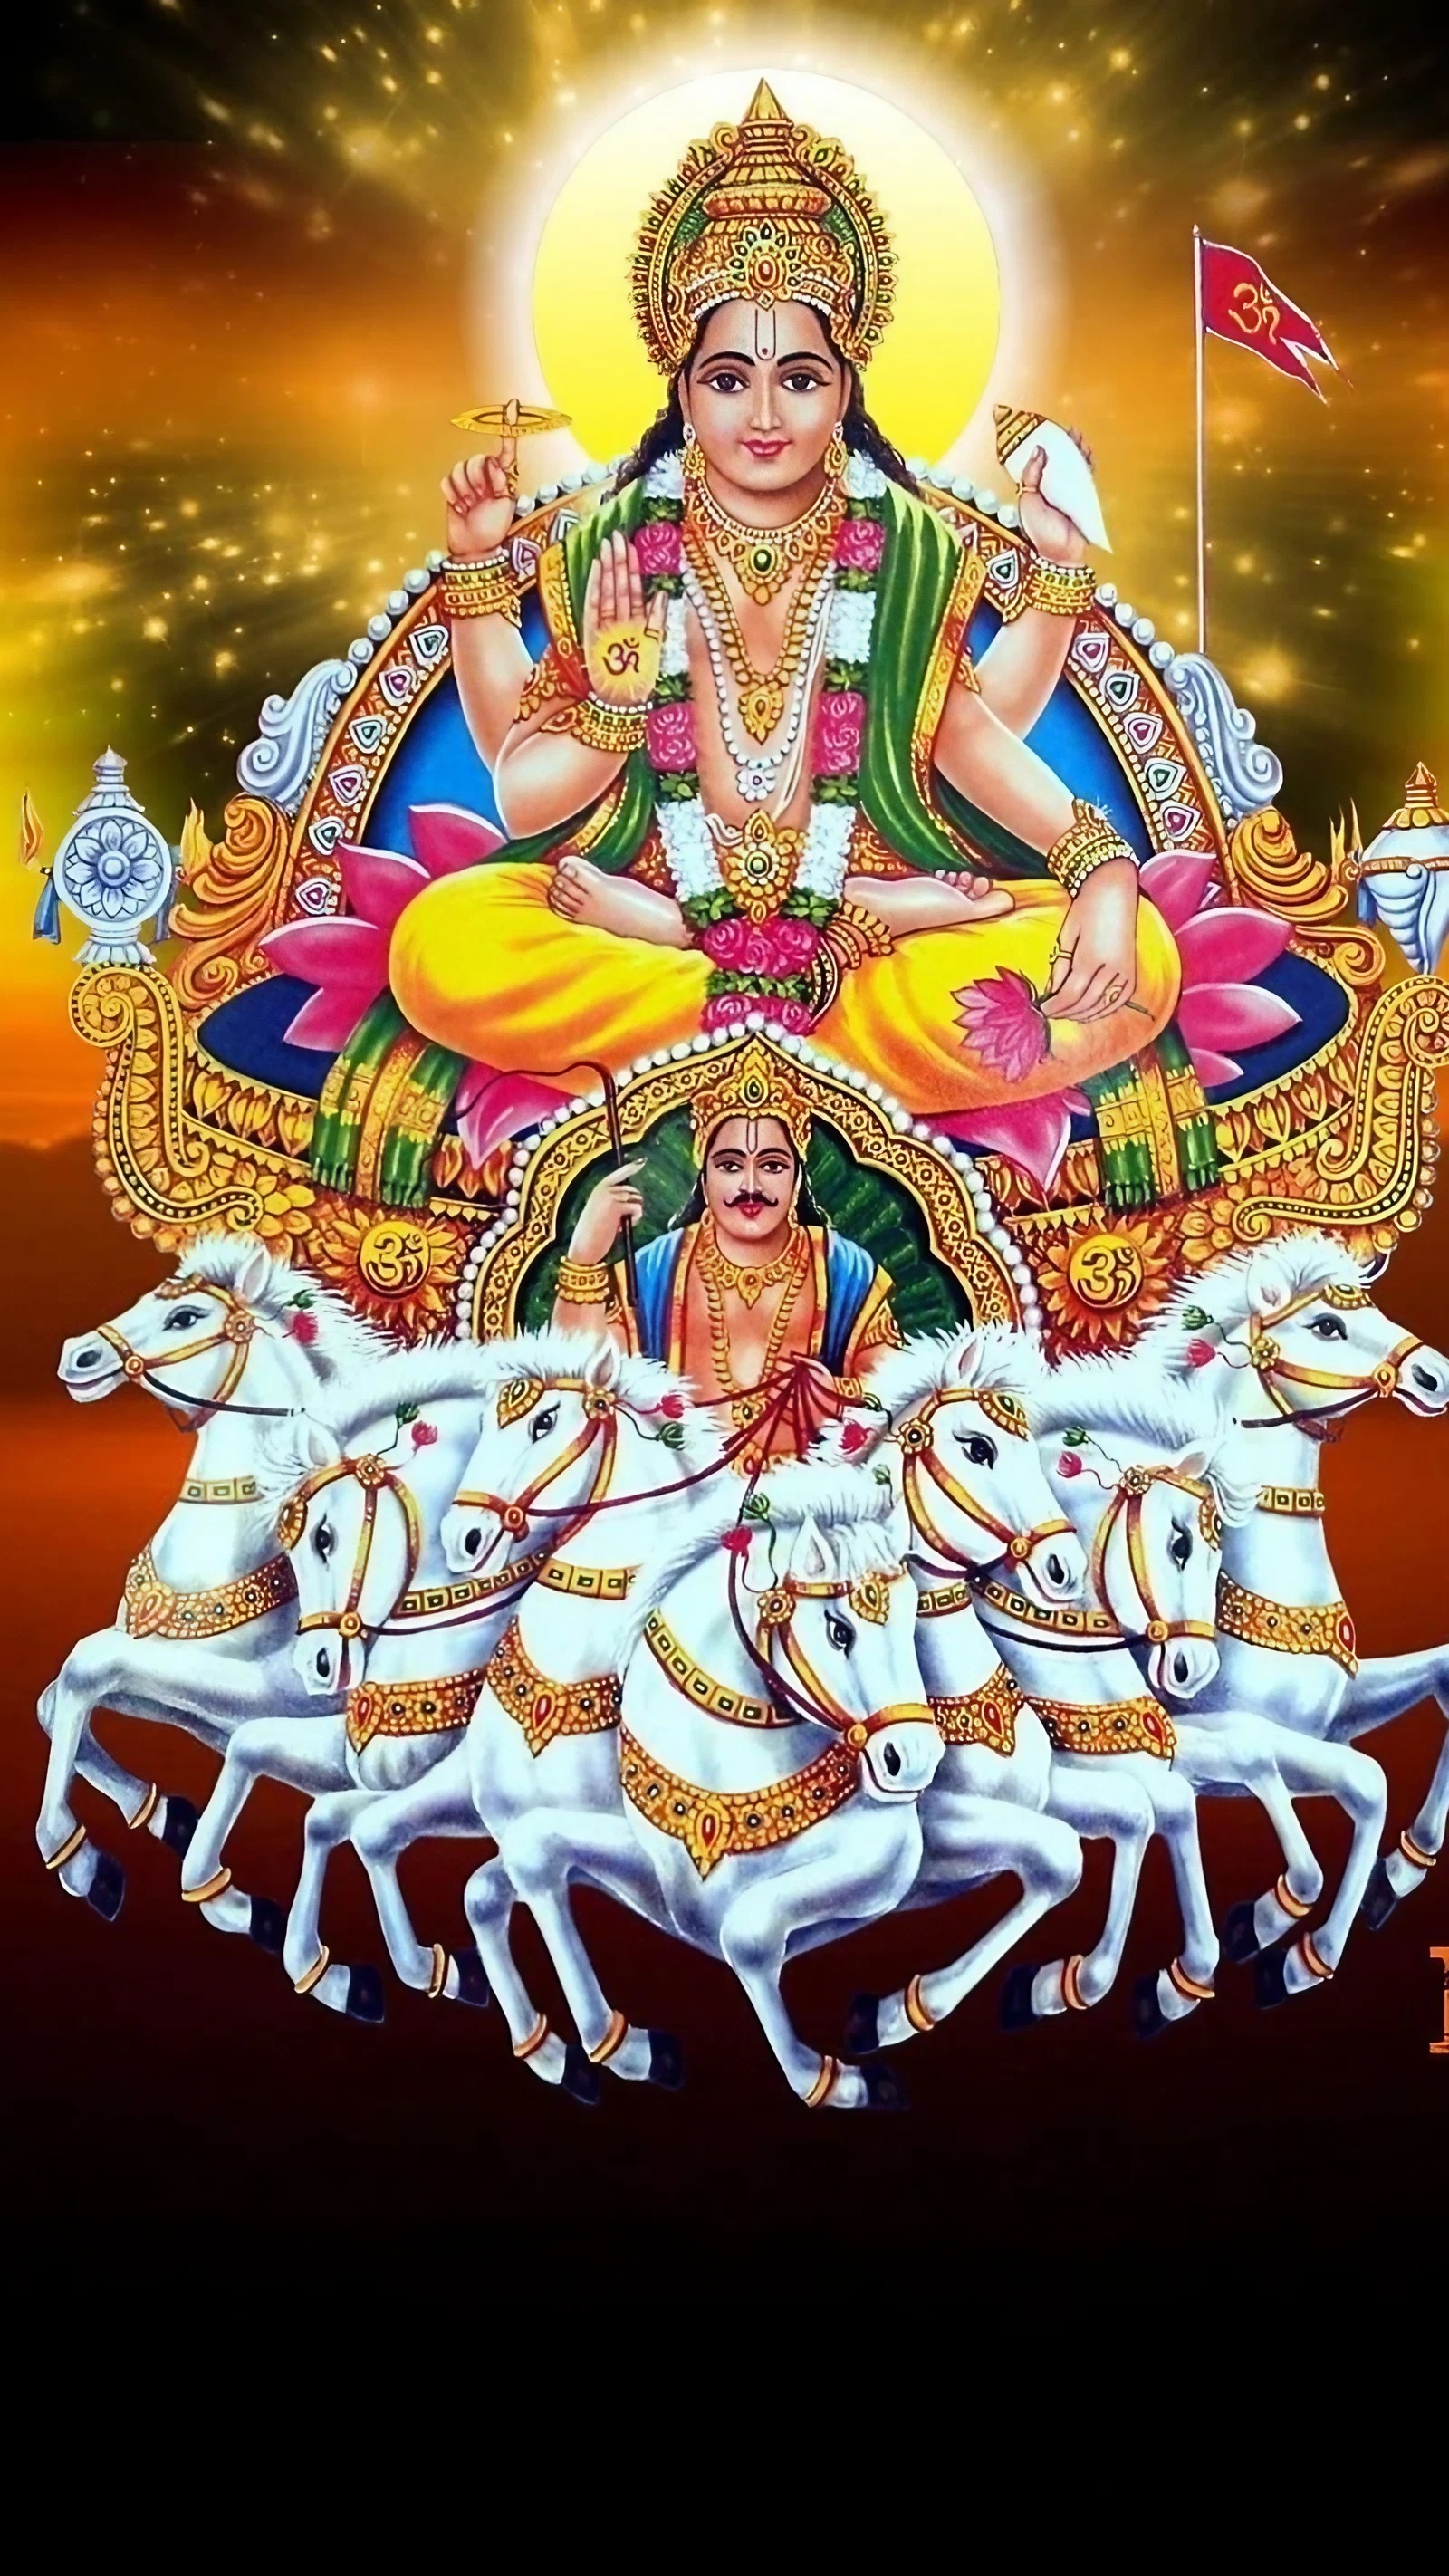 Seven Horse - Bhakti